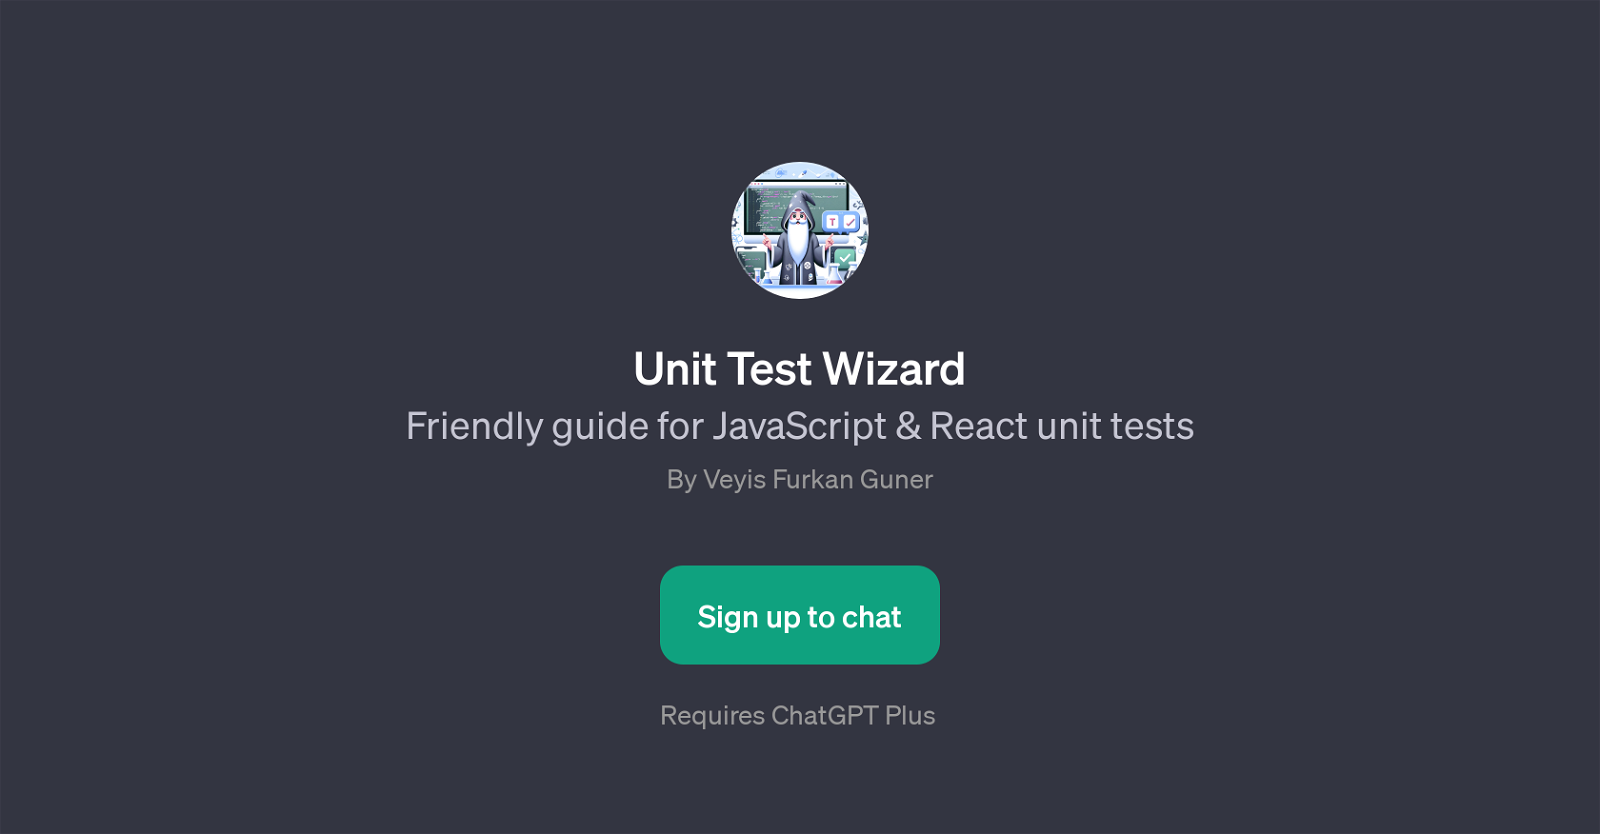 Unit Test Wizard website